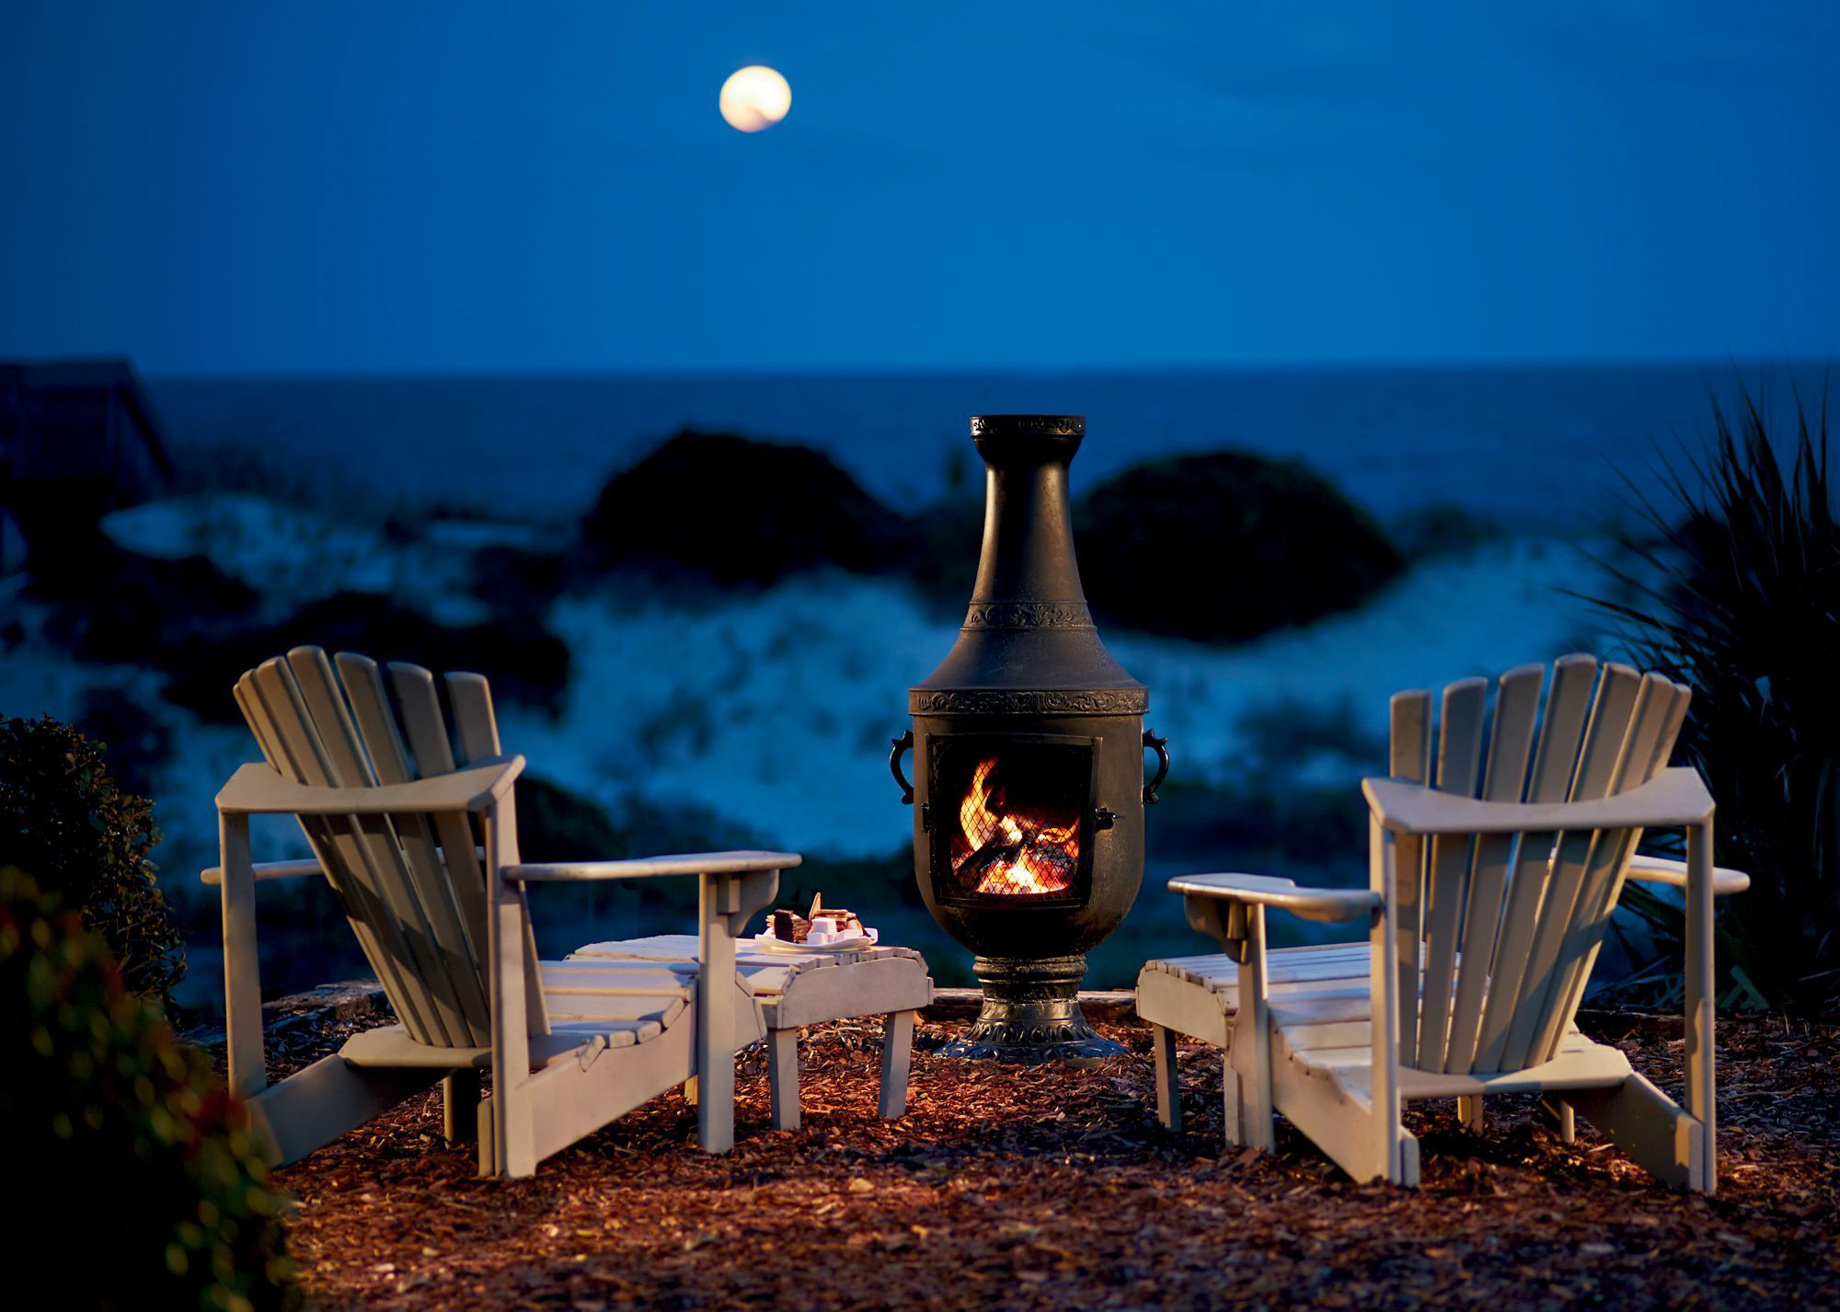 The Ritz-Carlton, Amelia Island Resort – Fernandina Beach, FL, USA – Beach Chairs and Fire Stove at Night